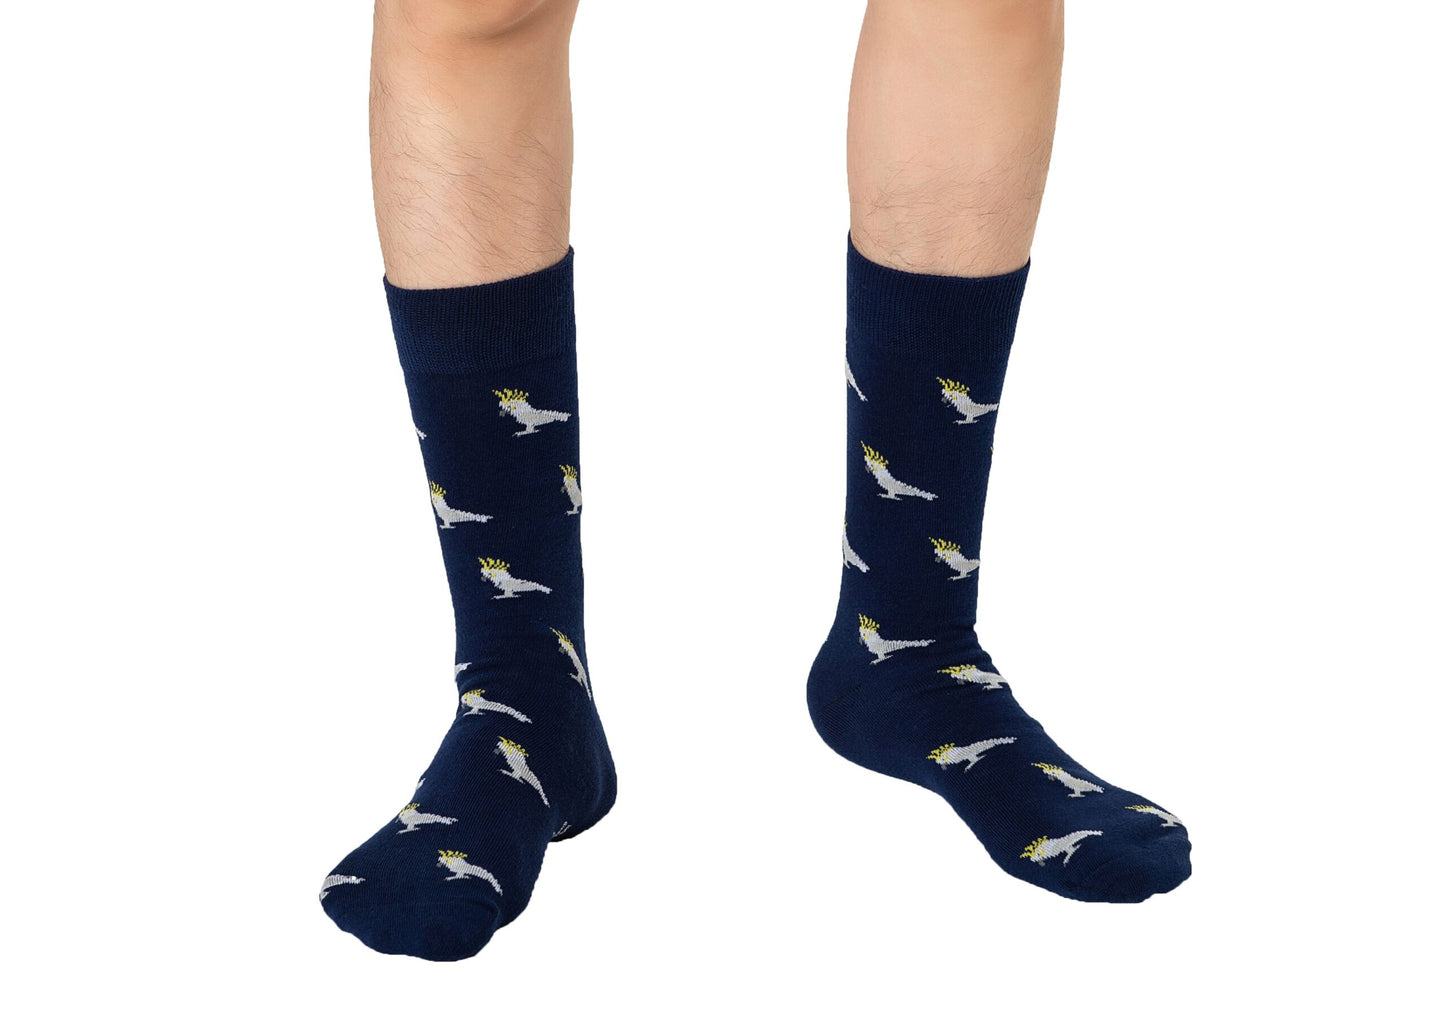 A boy sporting Cockatoo Socks.